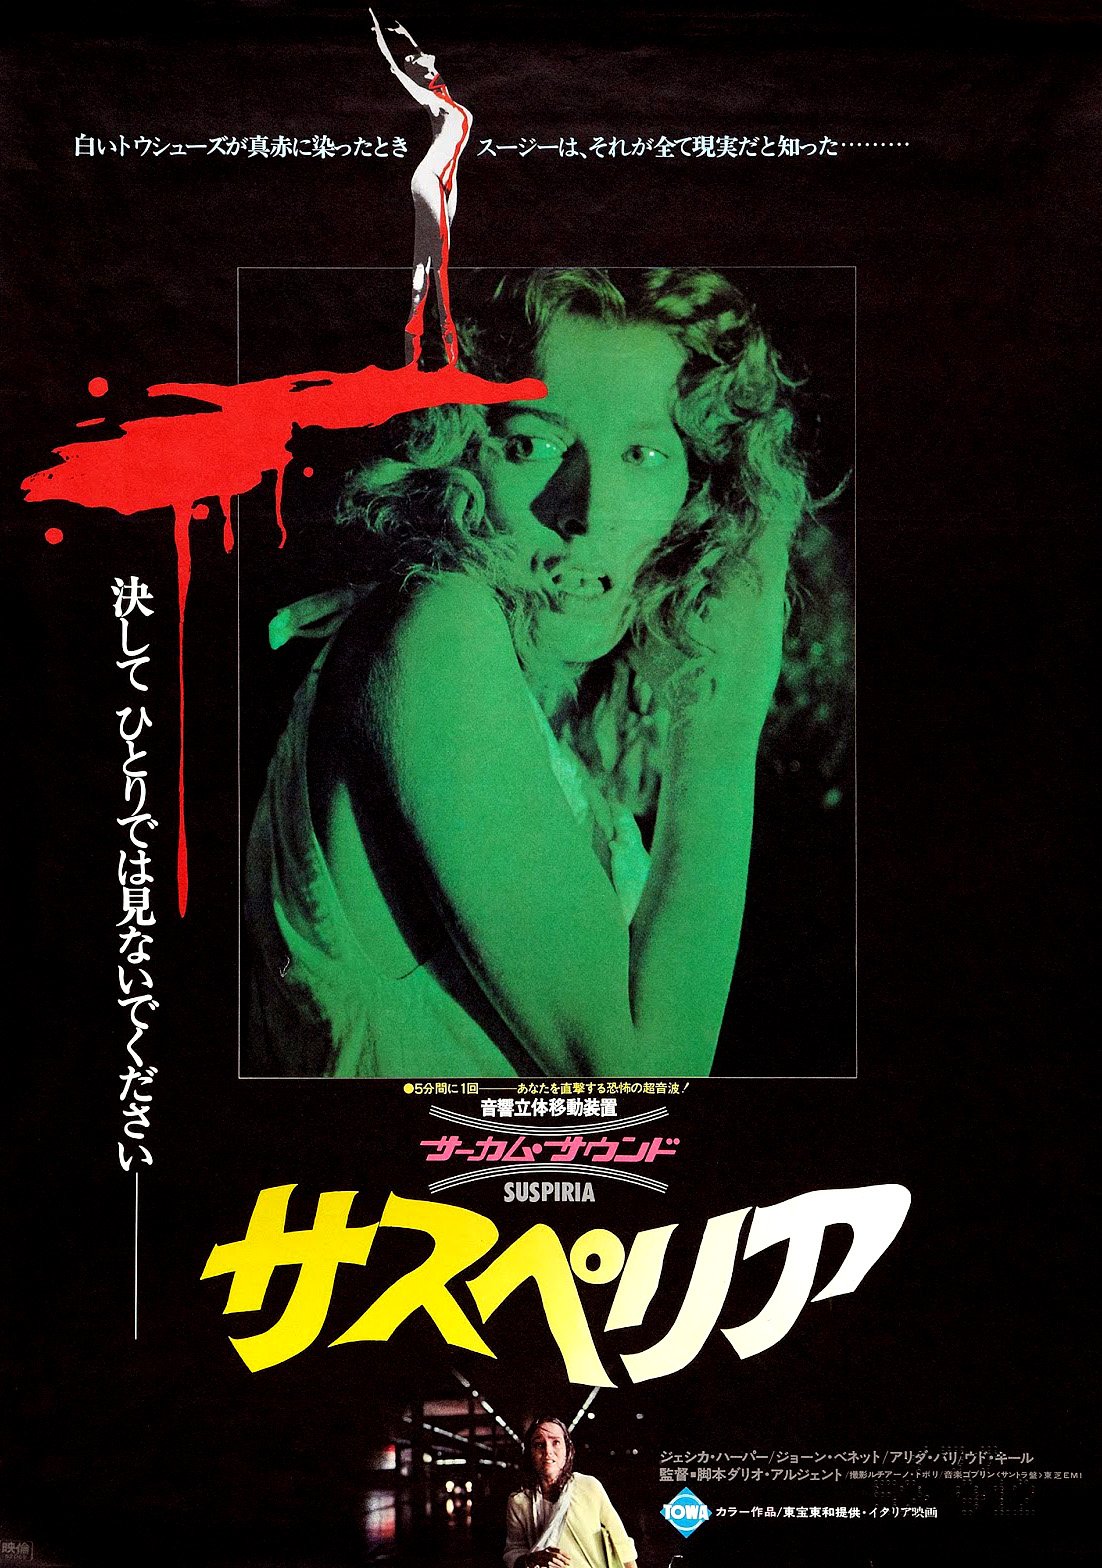 Happy birthday to Dario Argento - SUSPIRIA - 1977 - Japanese release poster 